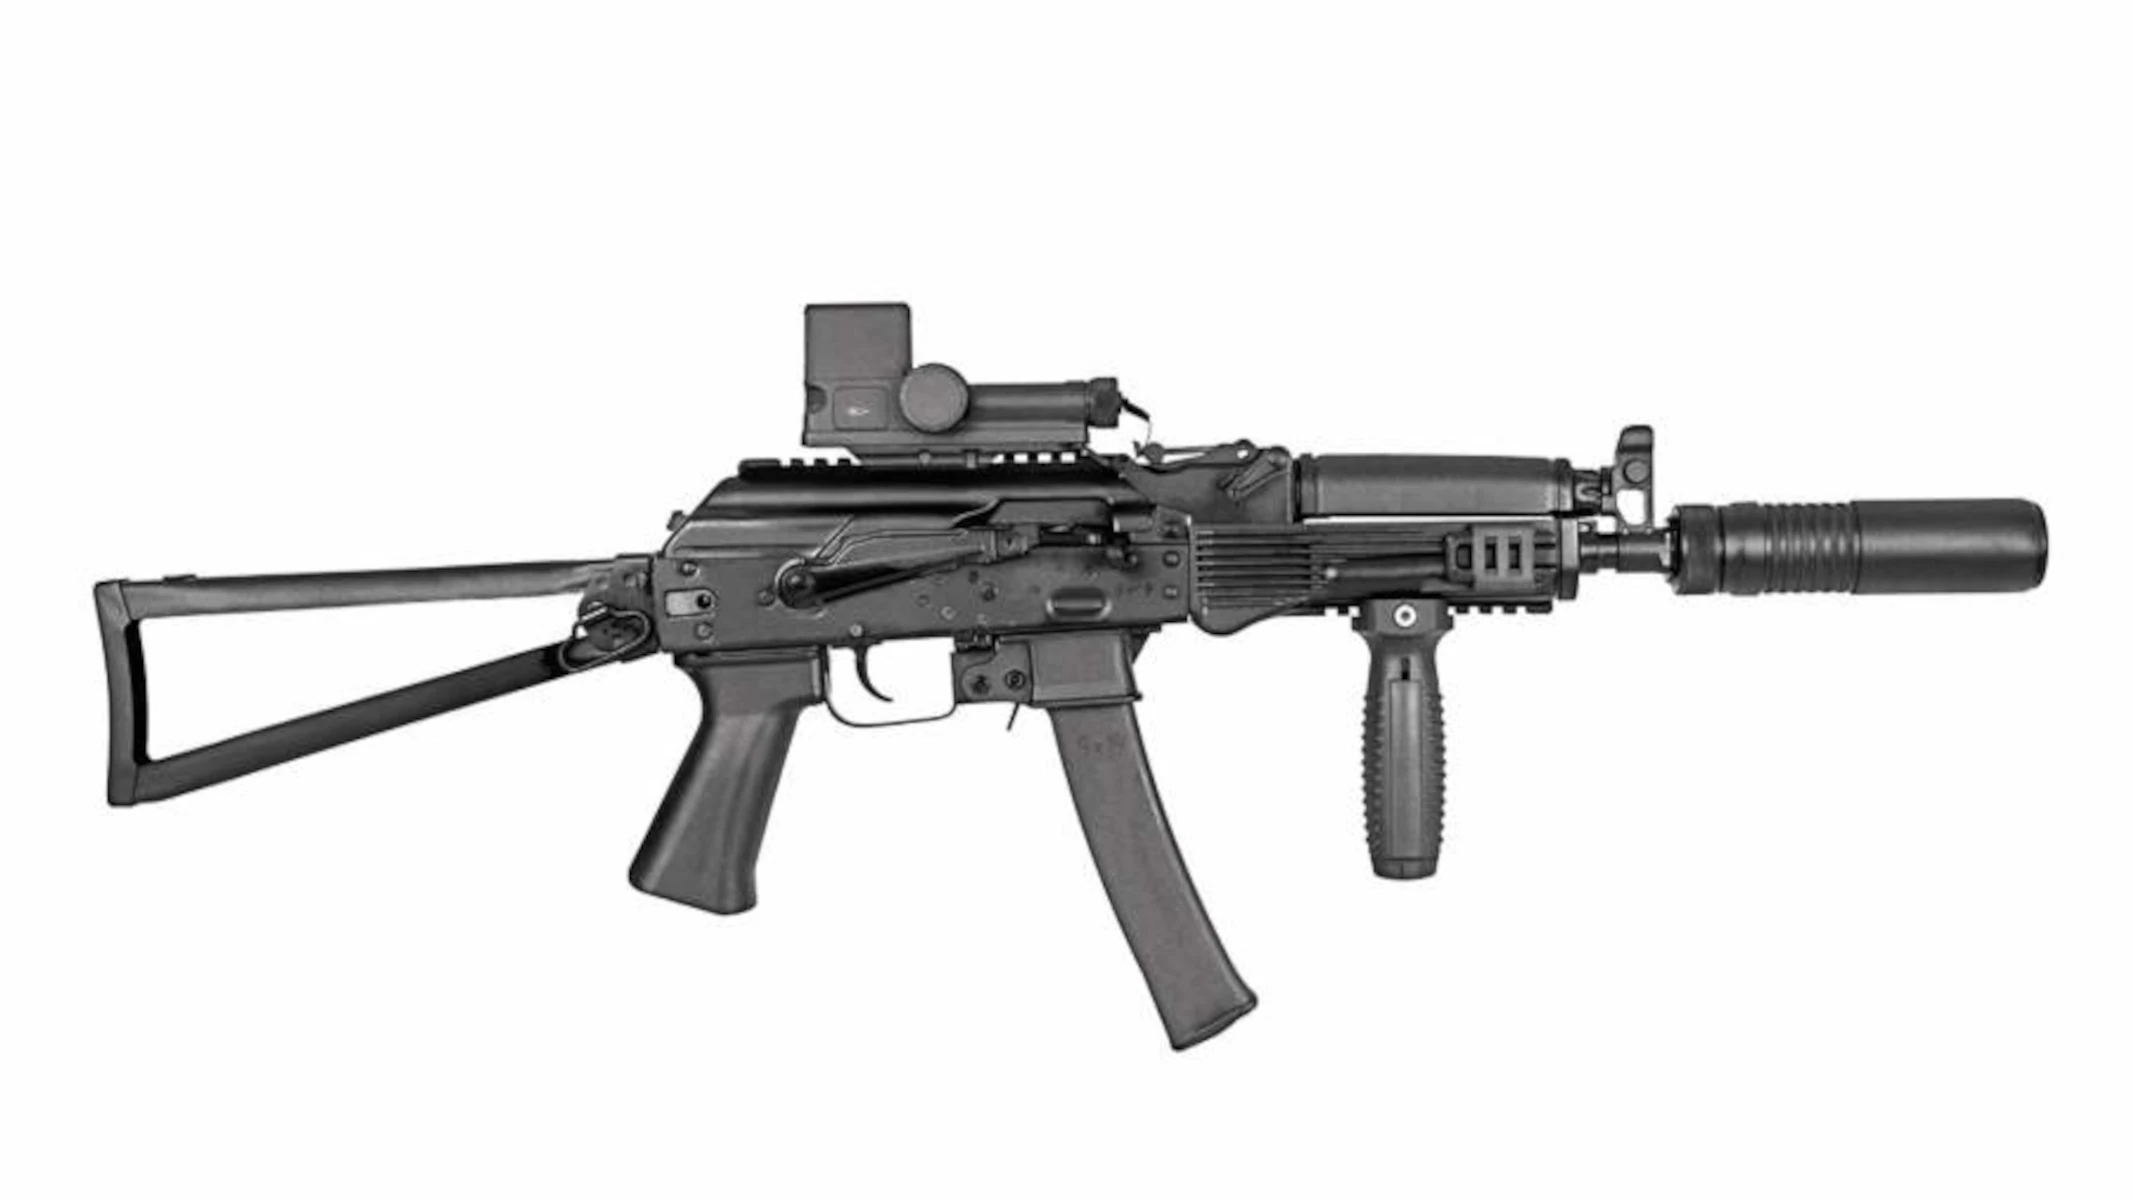 PPK-20 submachine gun